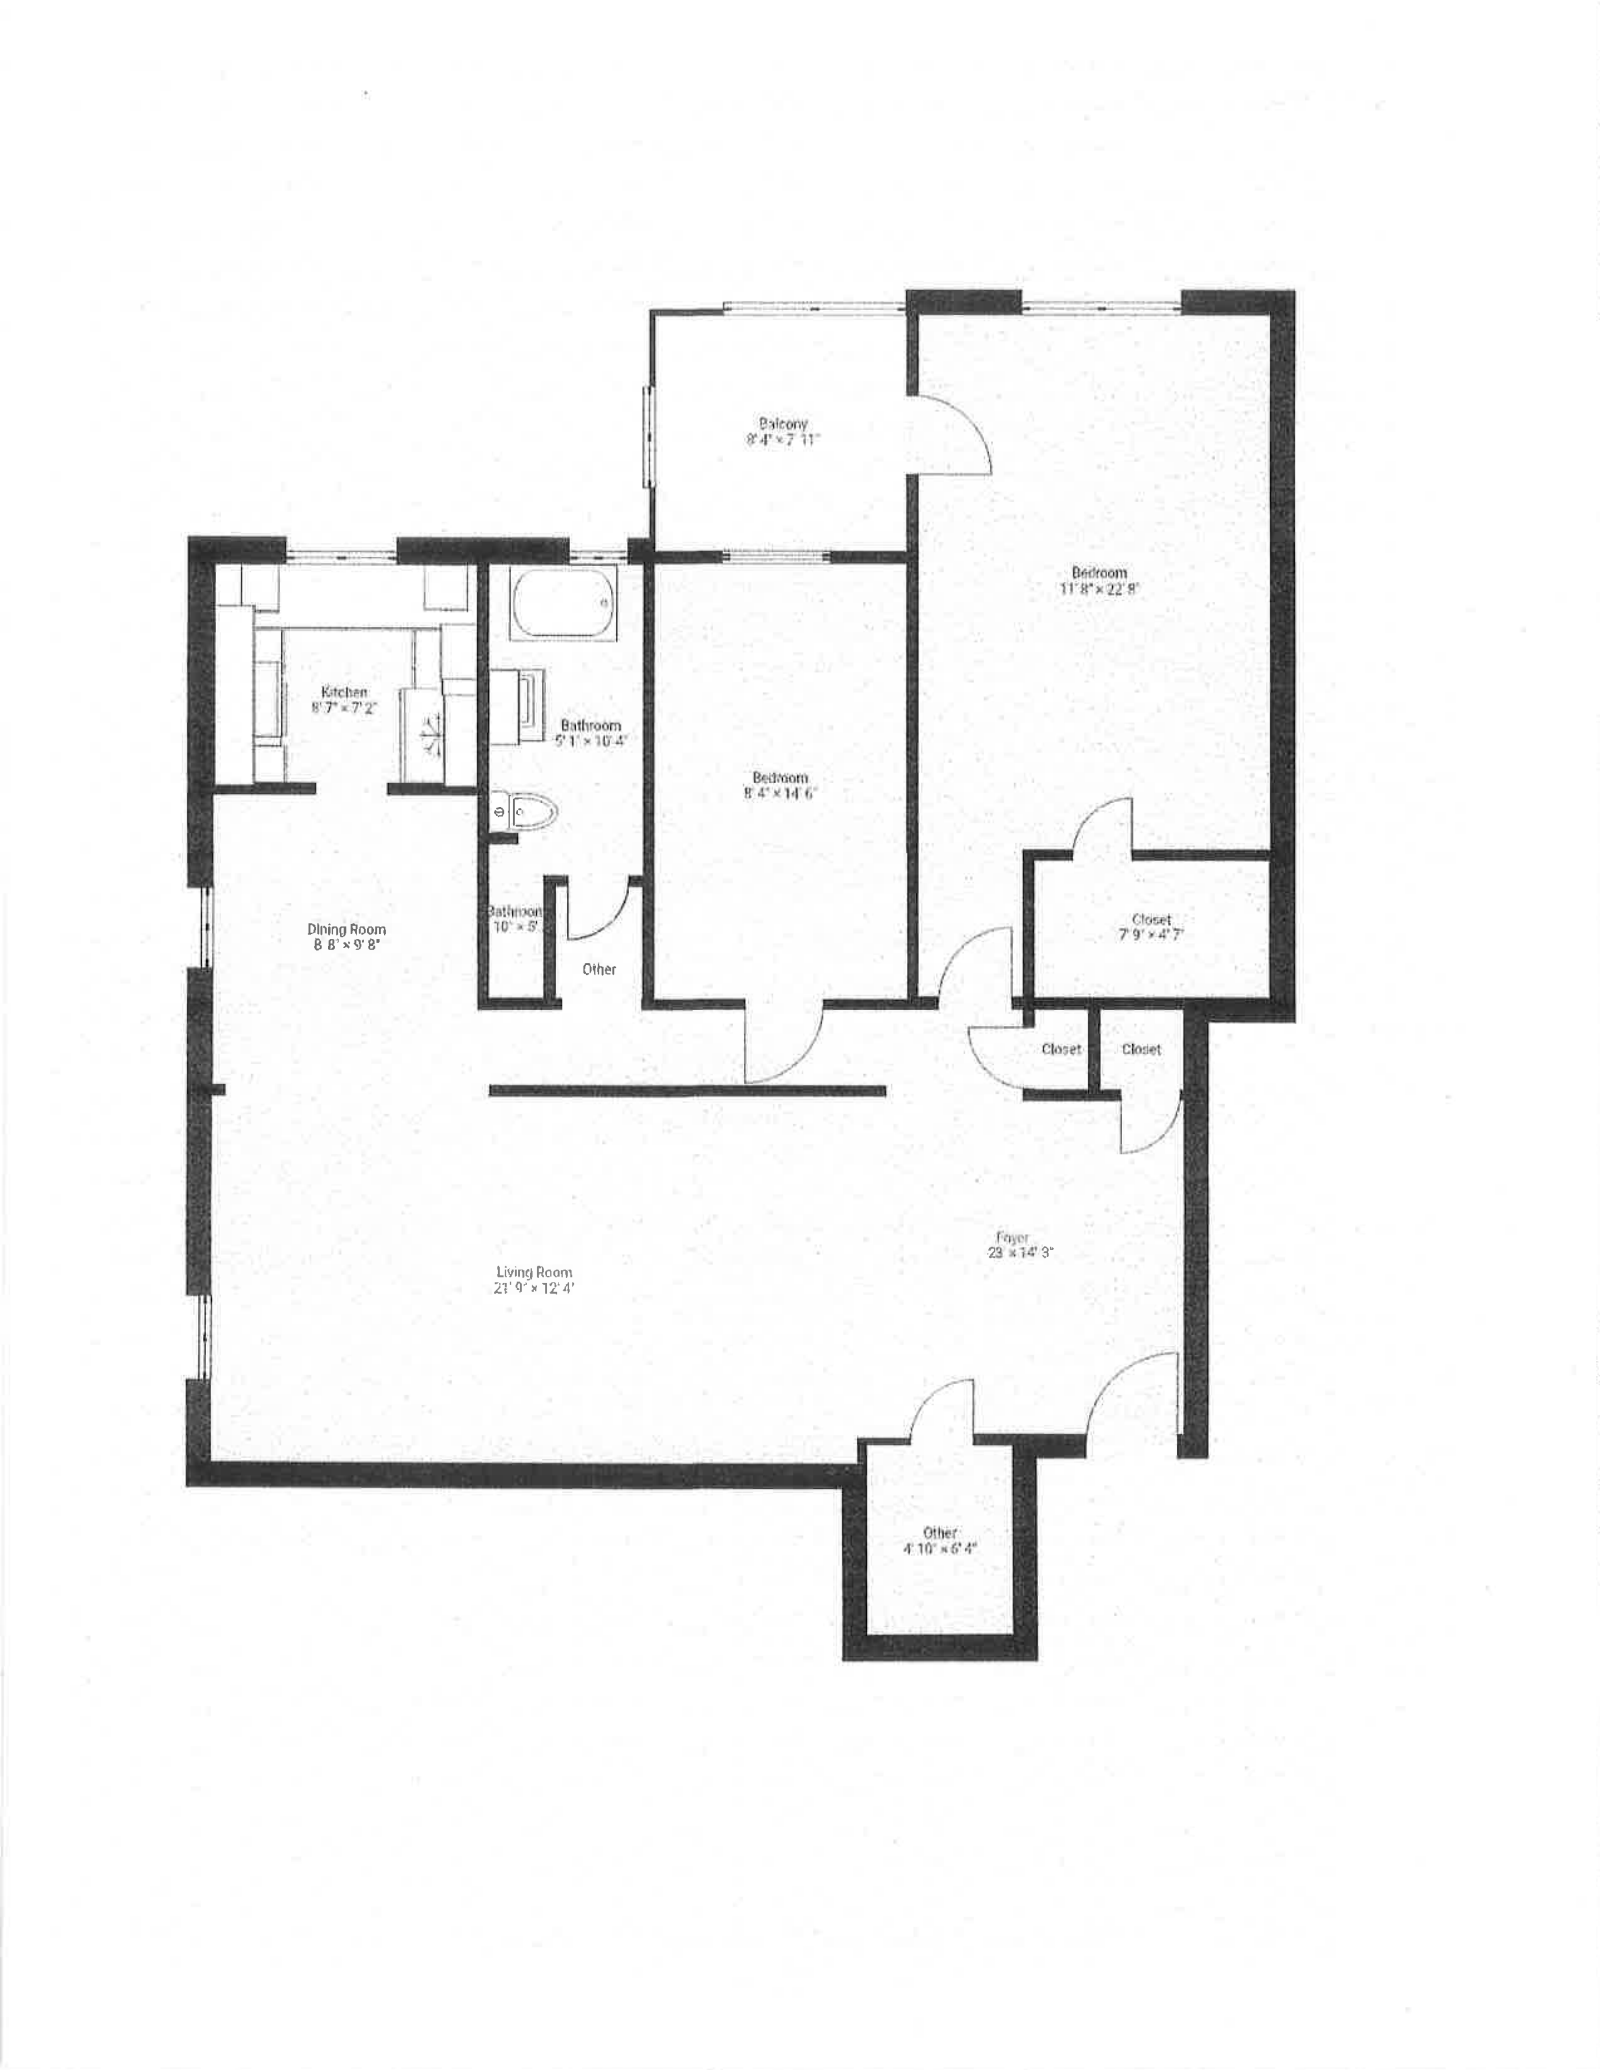 Floorplan for 68-61 Yellowstone Blvd, 314